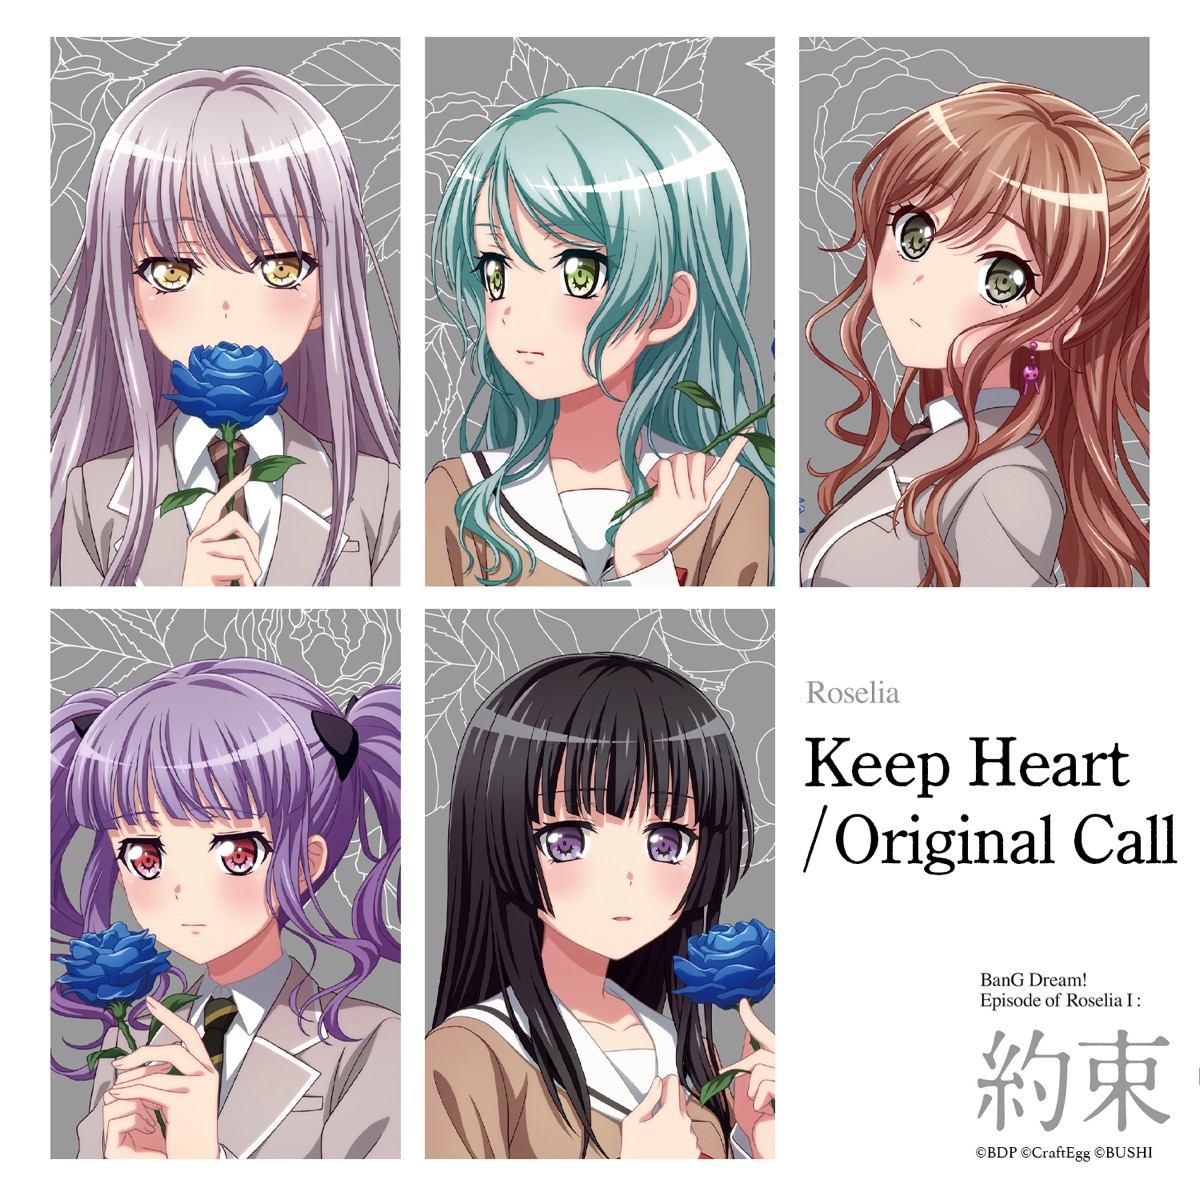 『Roselia - Original Call 歌詞』収録の『Keep Heart / Original Call』ジャケット